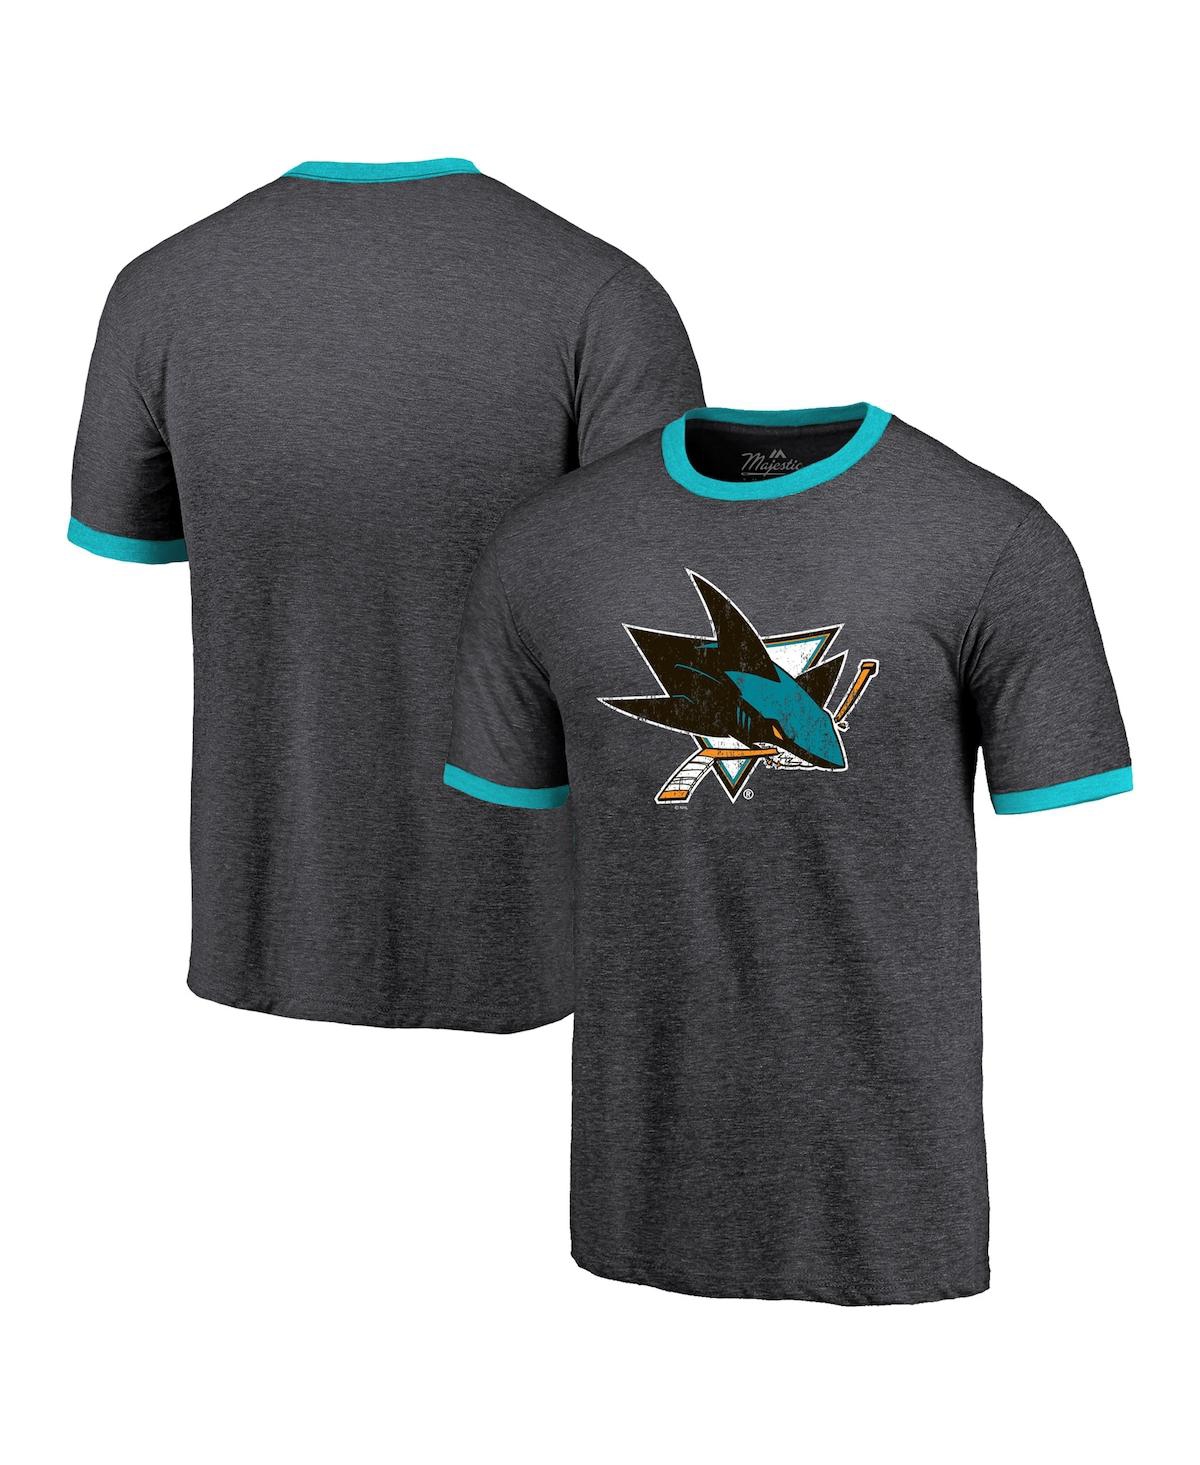 Men's Majestic Threads Heathered Black San Jose Sharks Ringer Contrast Tri-Blend T-shirt - Heathered Black